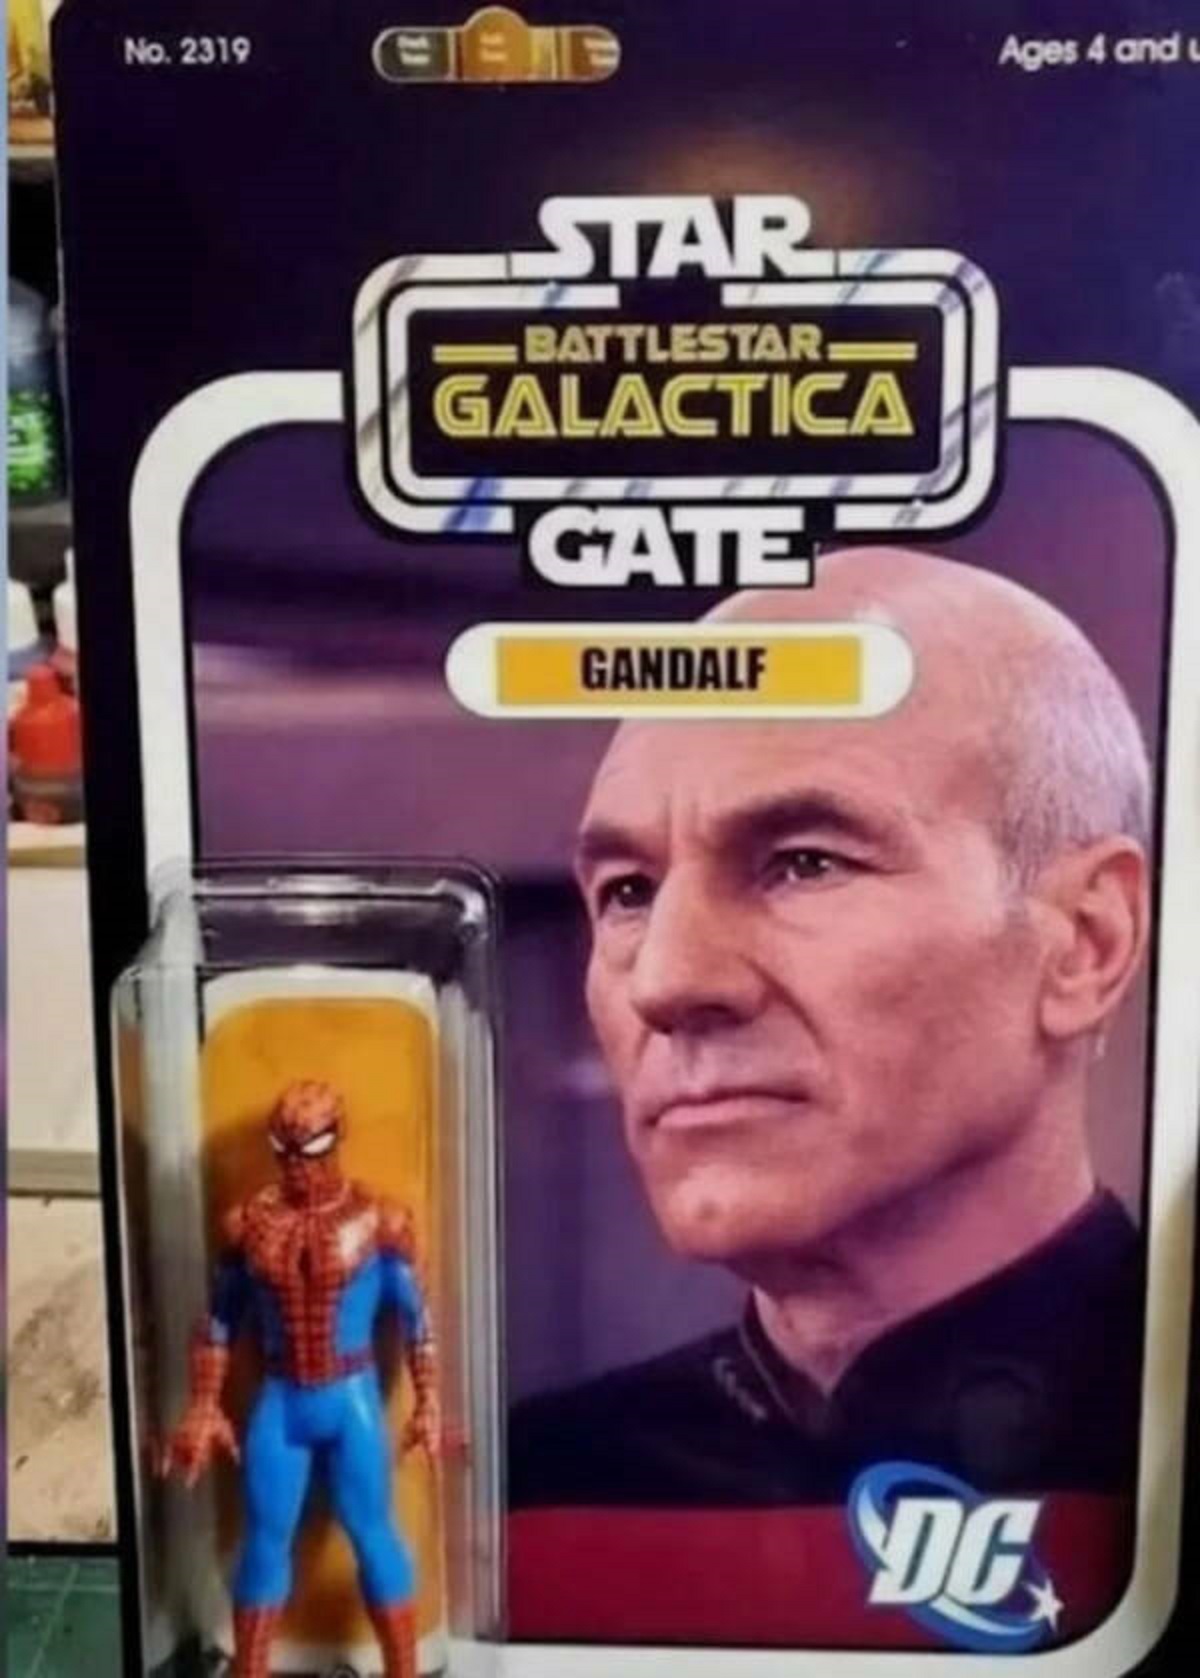 stargate battlestar galactica gandalf spider man - No. 2319 Ghd 11 11 Star Battlestar. Galactica Gate Gandalf Ages 4 and L Dc